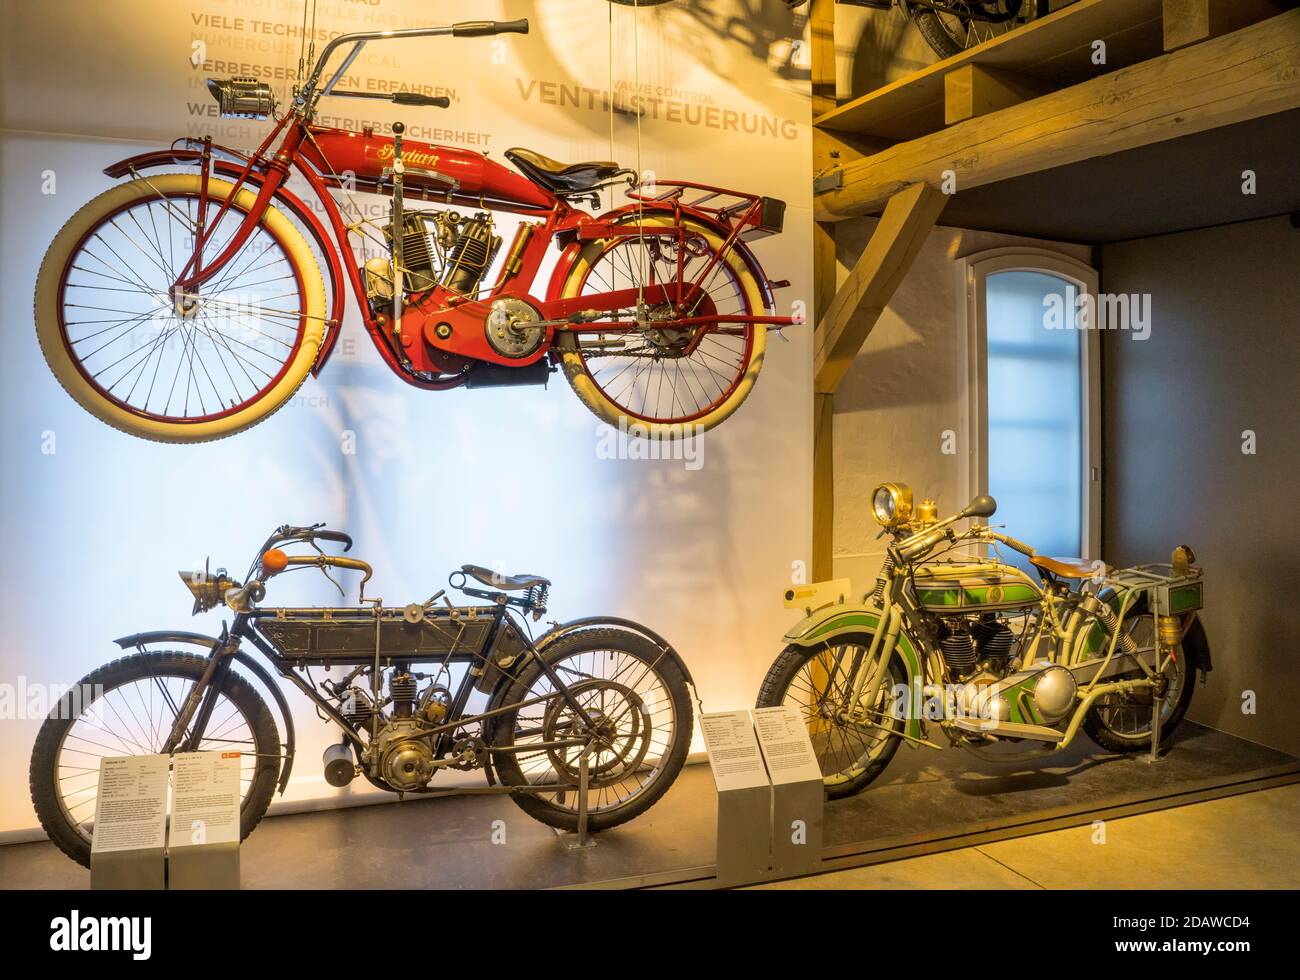 Vieux motocycles, PS.SPEICHER Museum, Einbeck, Basse-Saxe, Allemagne Banque D'Images